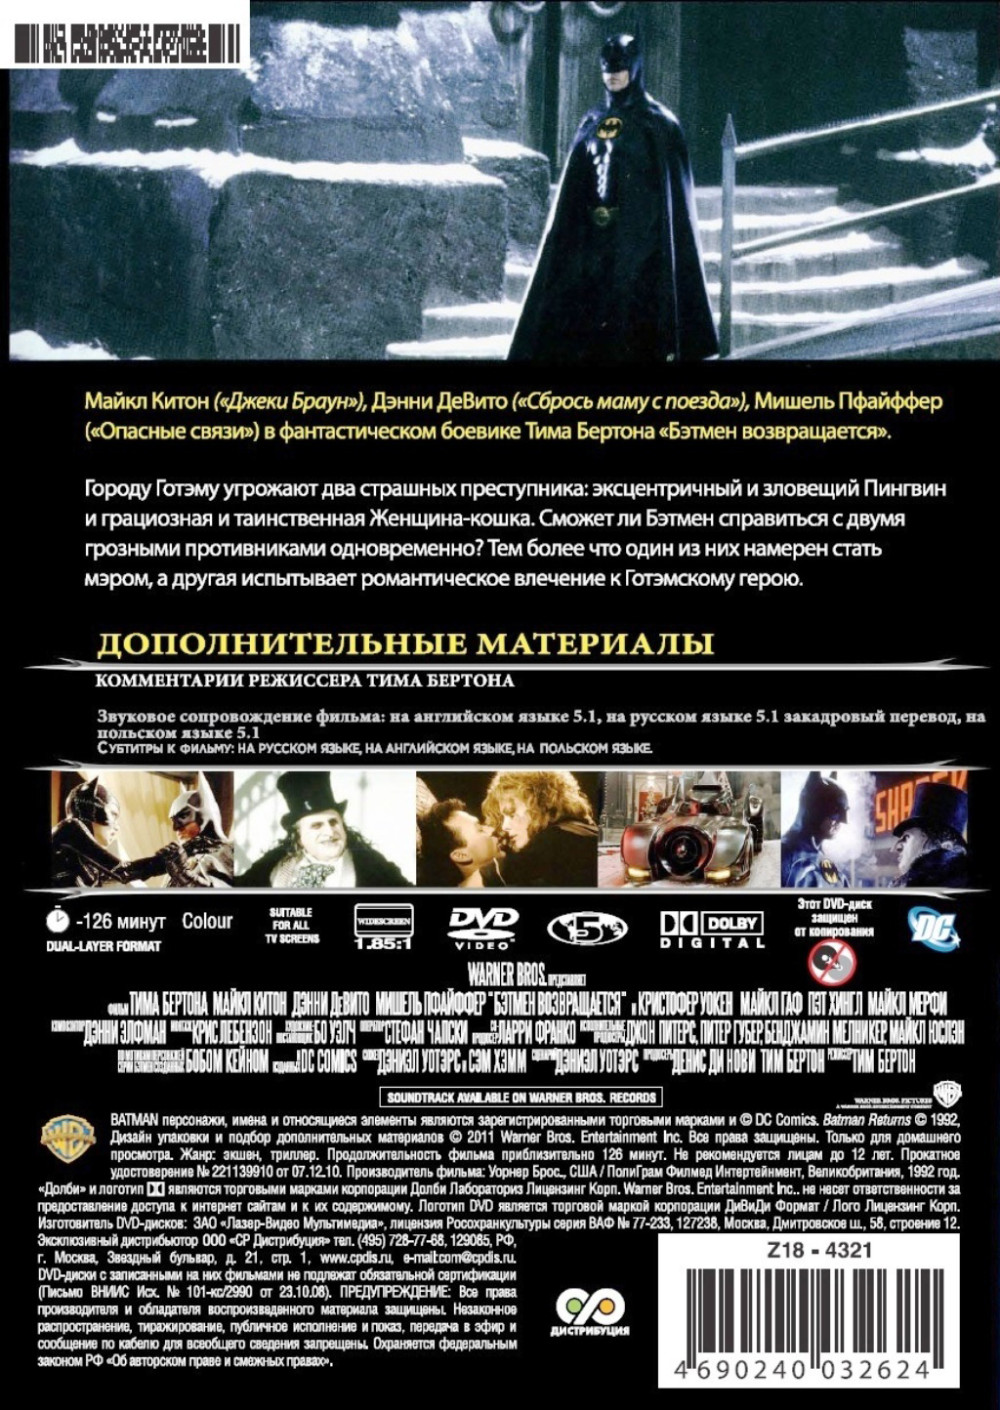 Бэтмен возвращается (DVD)